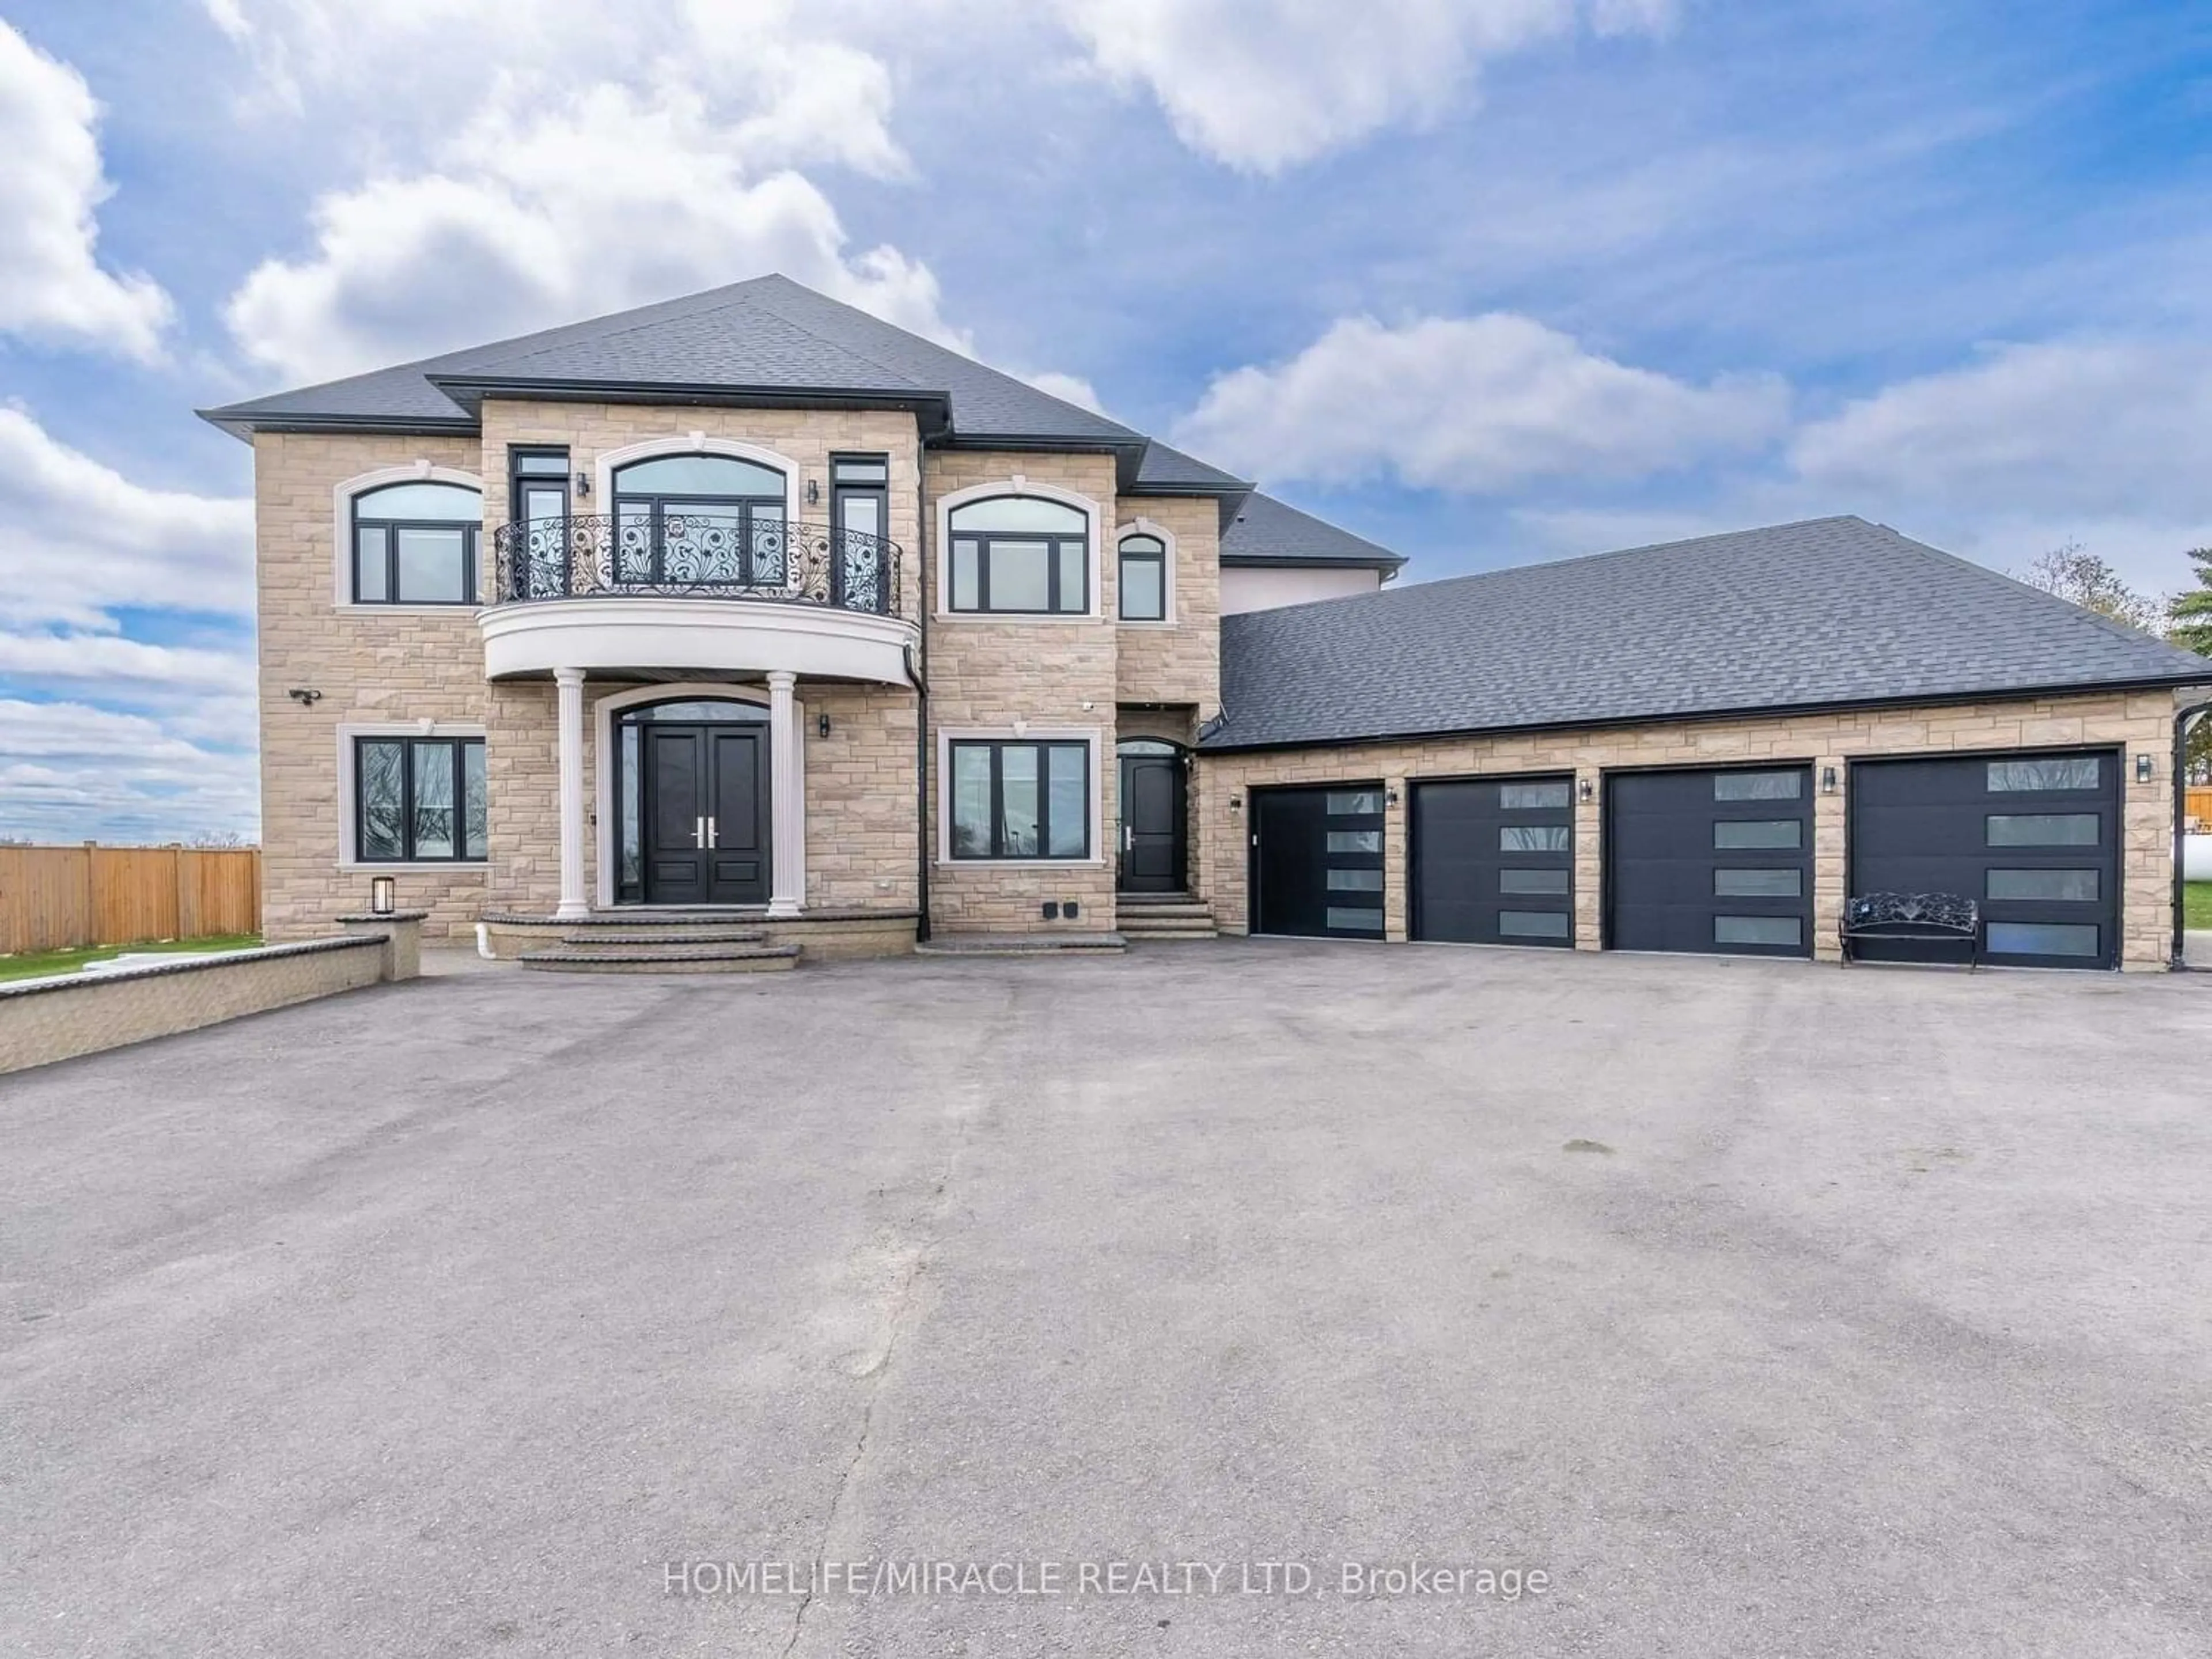 Frontside or backside of a home for 11086 Winston Churchill Blvd, Halton Hills Ontario L7G 4S7